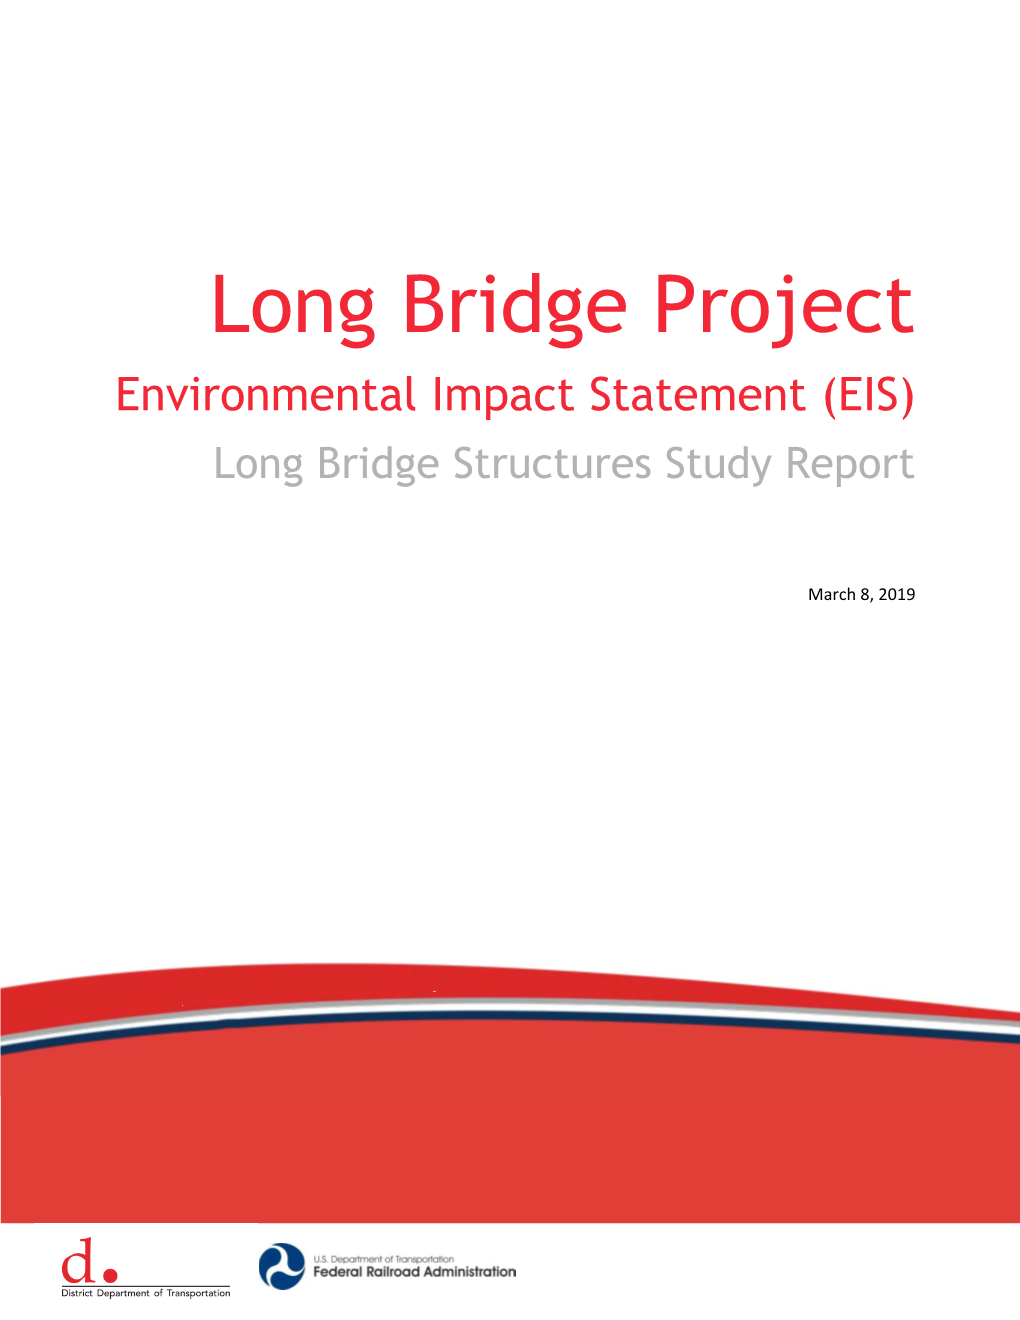 Long Bridge Structures Study Report